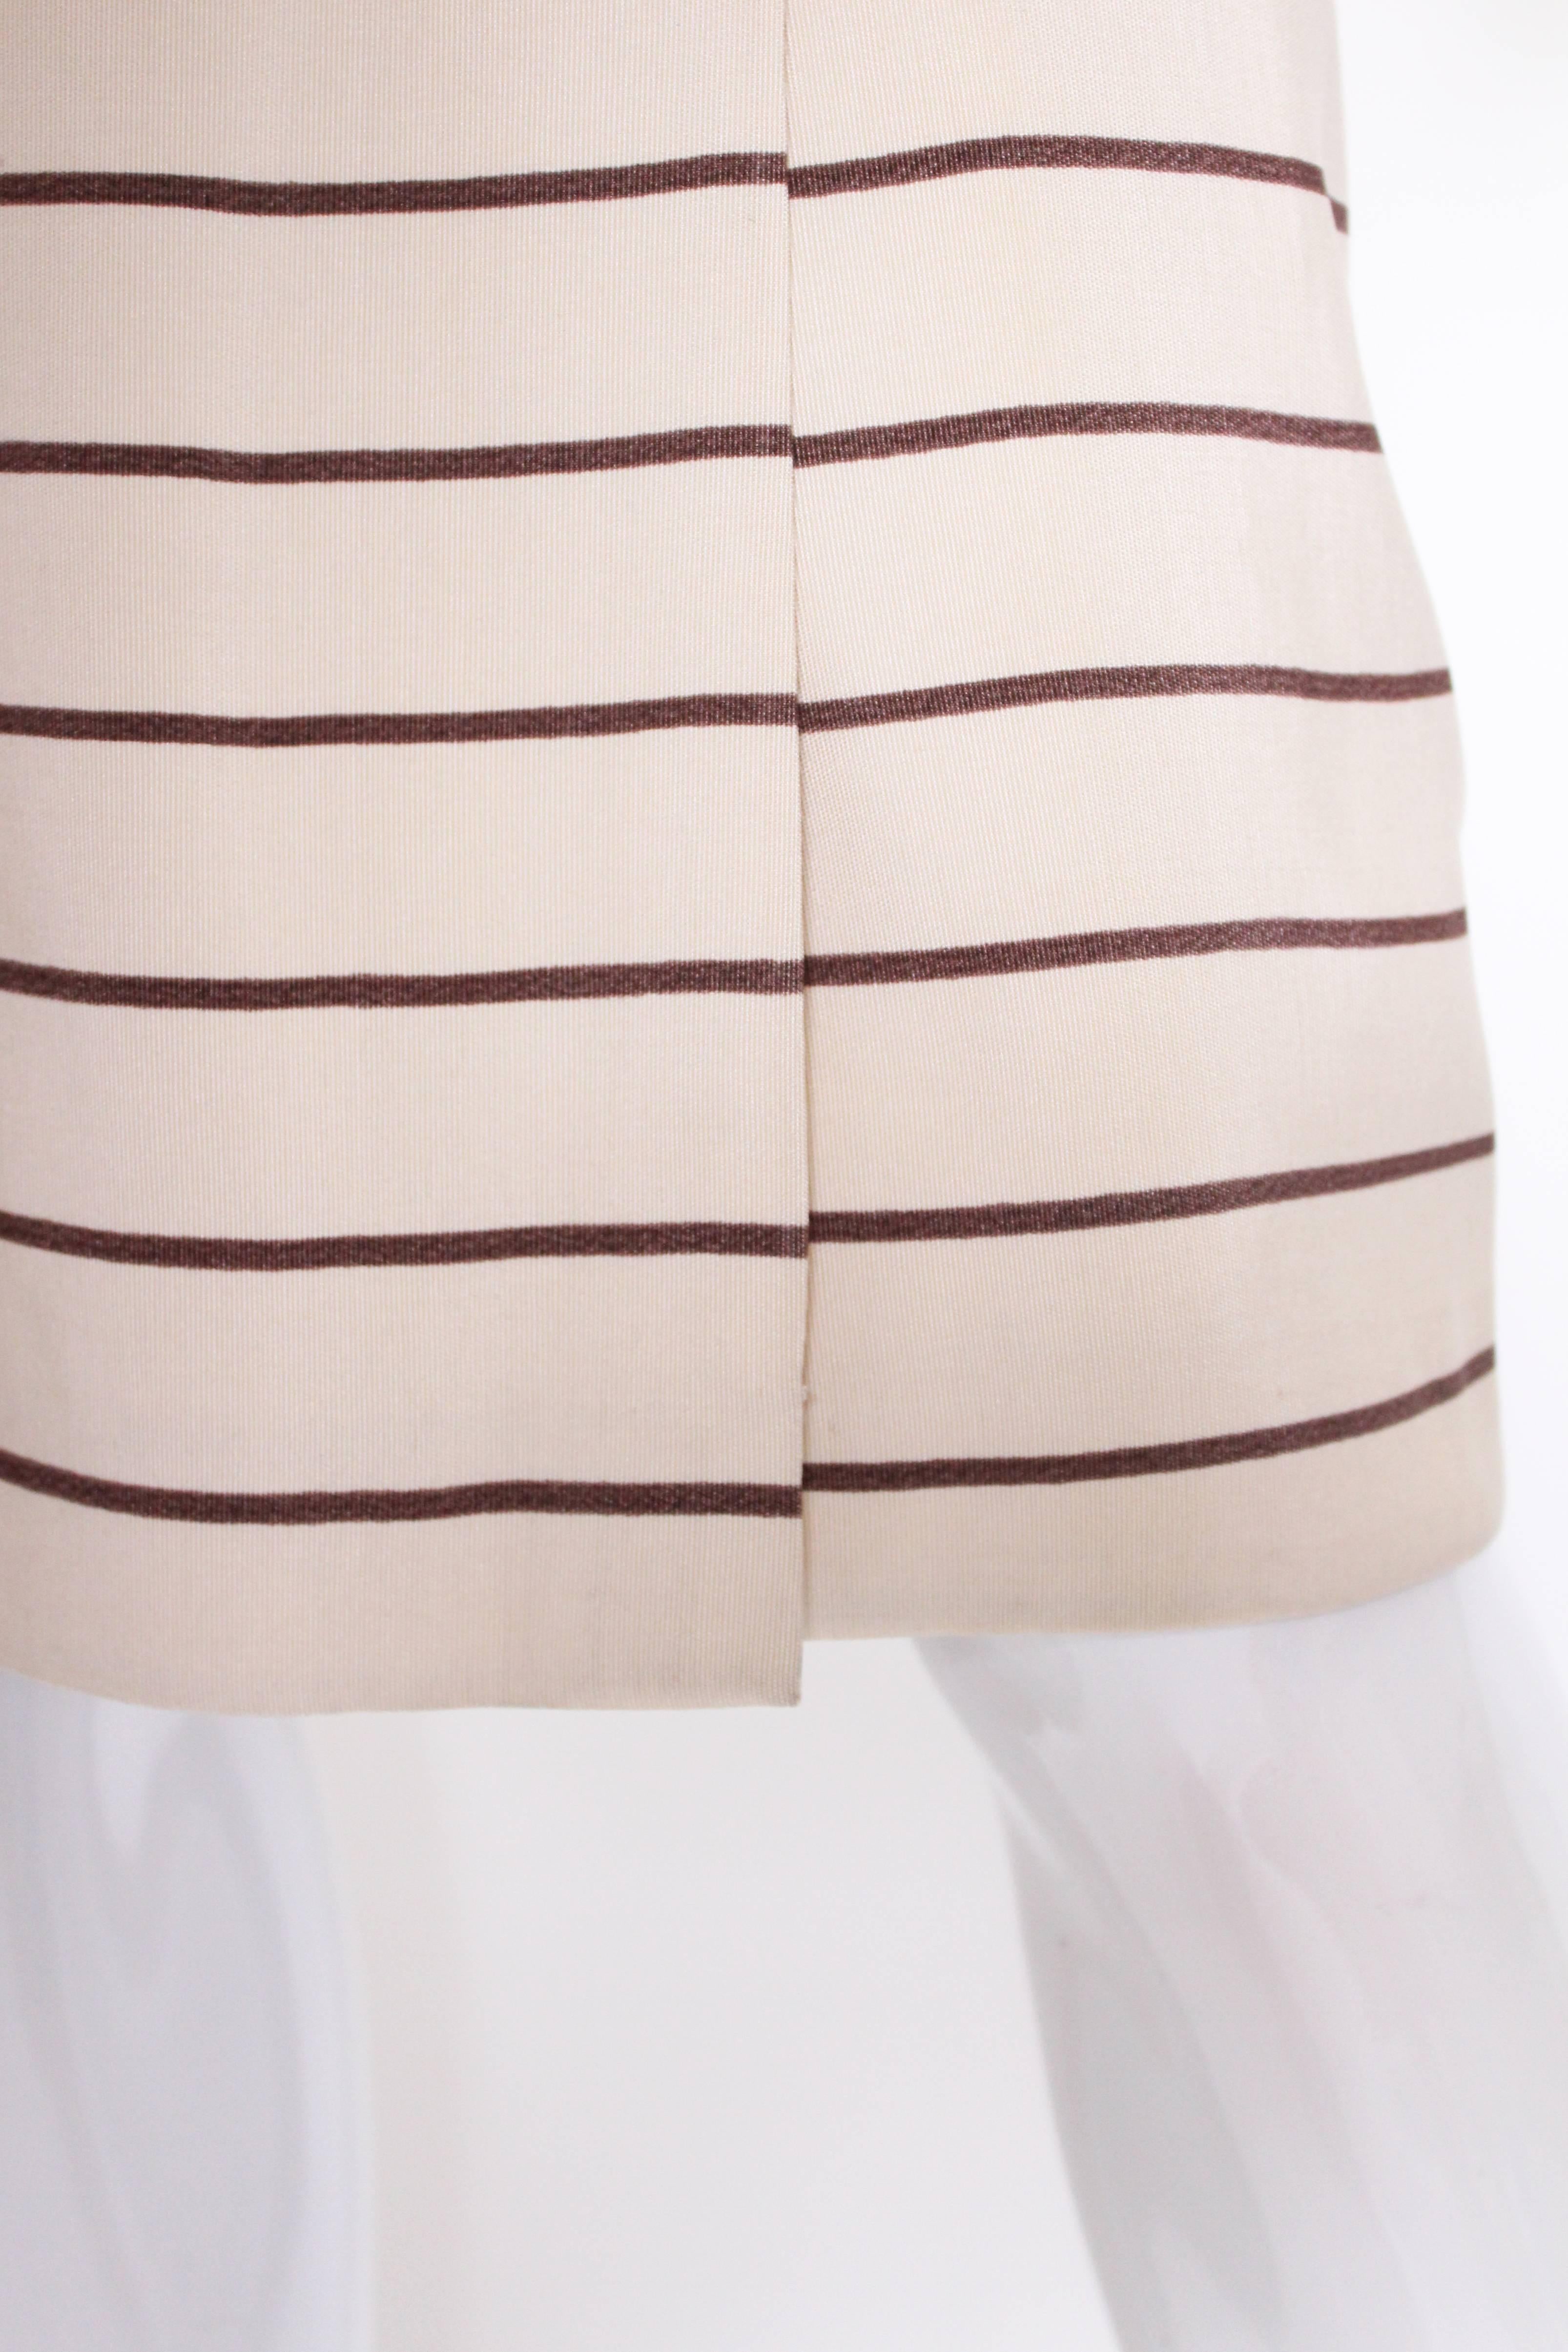 Vintage Chanel Haut Couture Skirt Suit 1974 For Sale 1